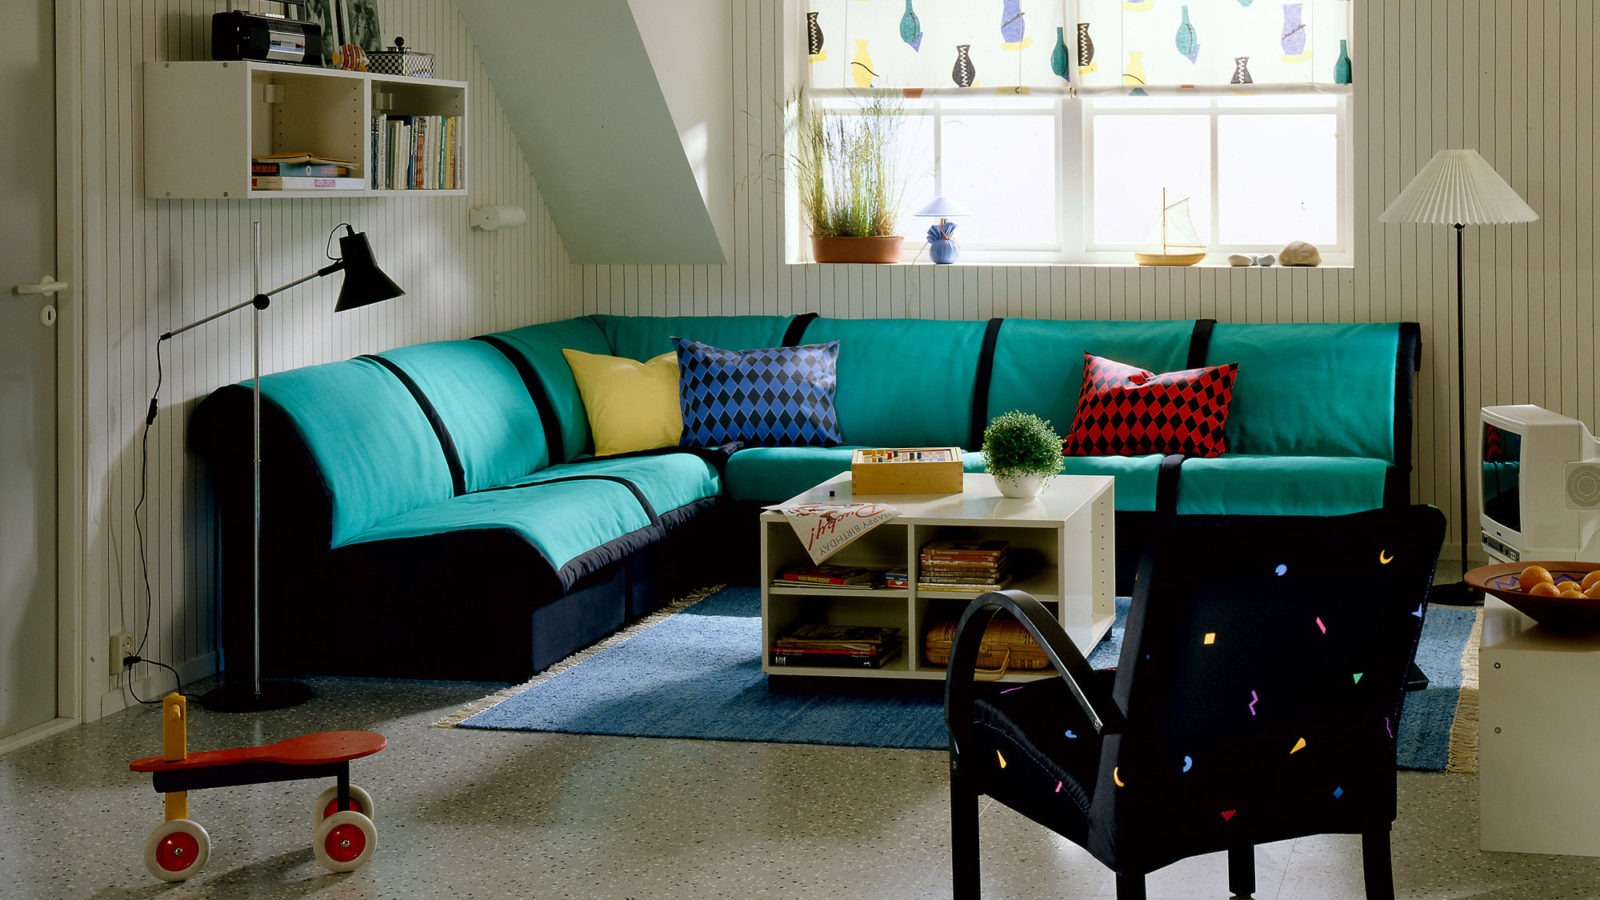 Helles Zimmer mit schwarz-grünem Modulsofa, Modell LEXBY, als Ecksofa arrangiert. Farbenfrohe, gemusterte Textilien.